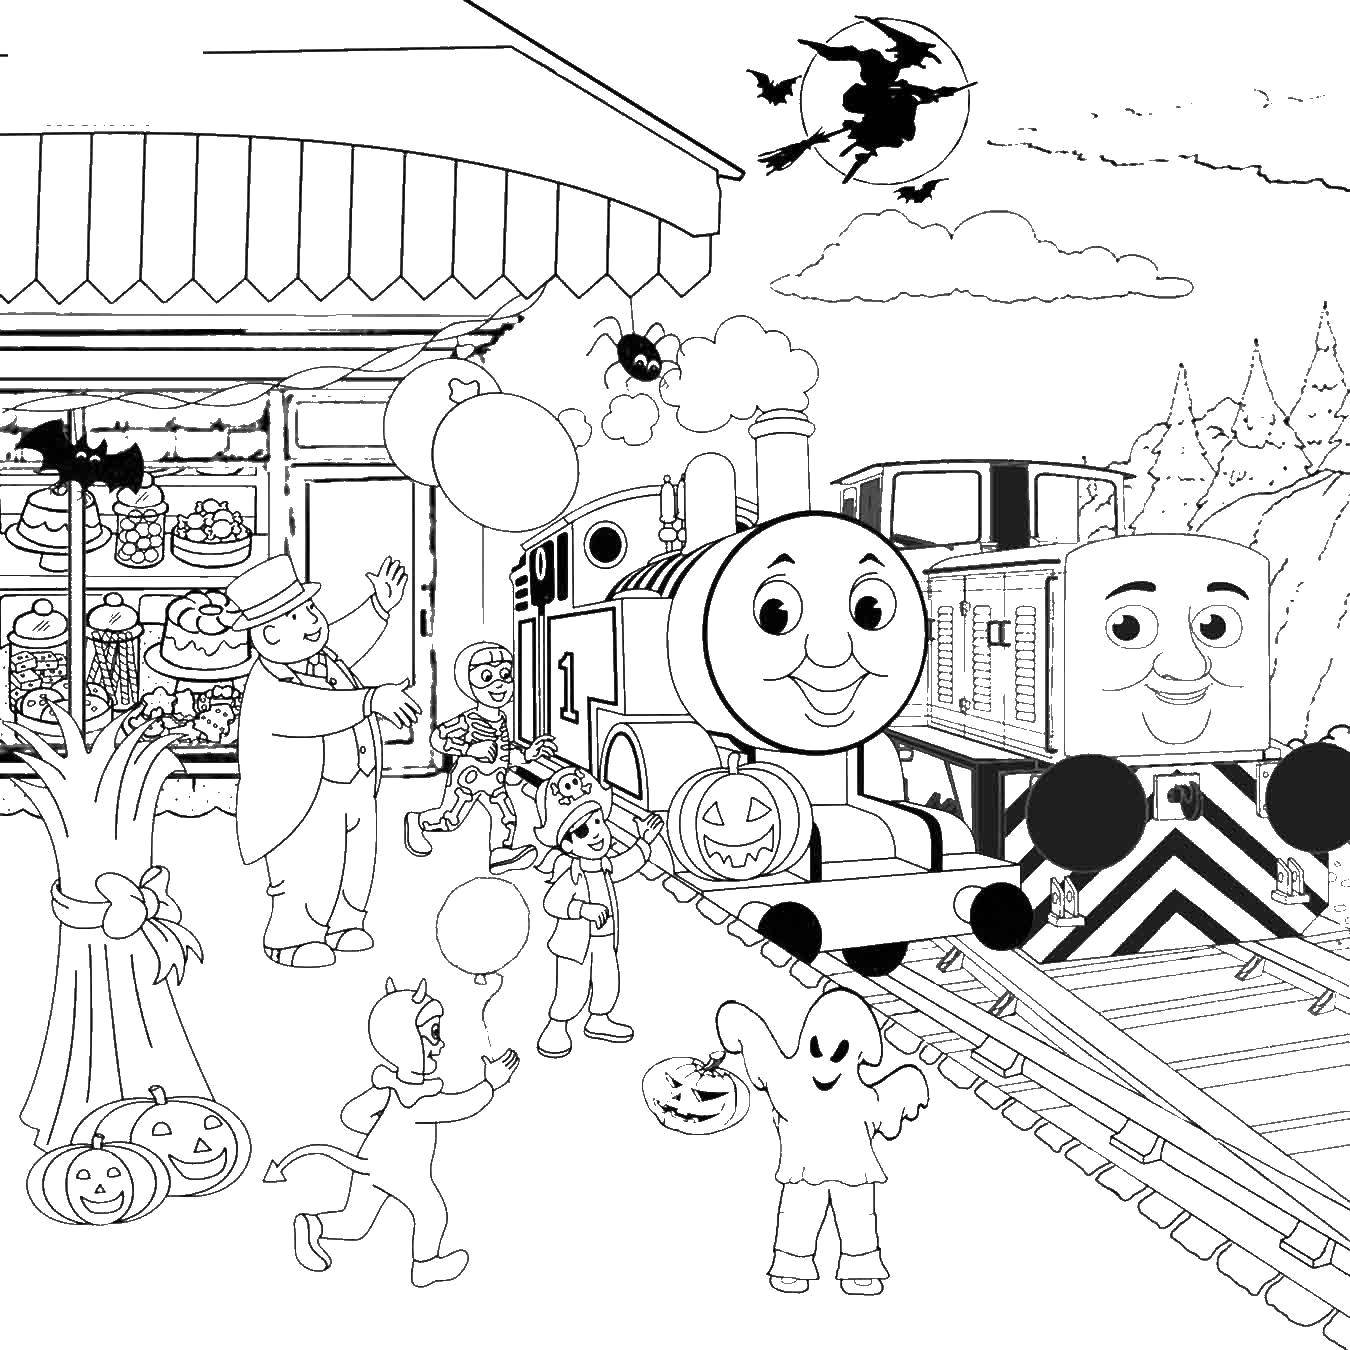 Coloring Thomas the tank engine. Category Cartoon character. Tags:  Train, Thomas.